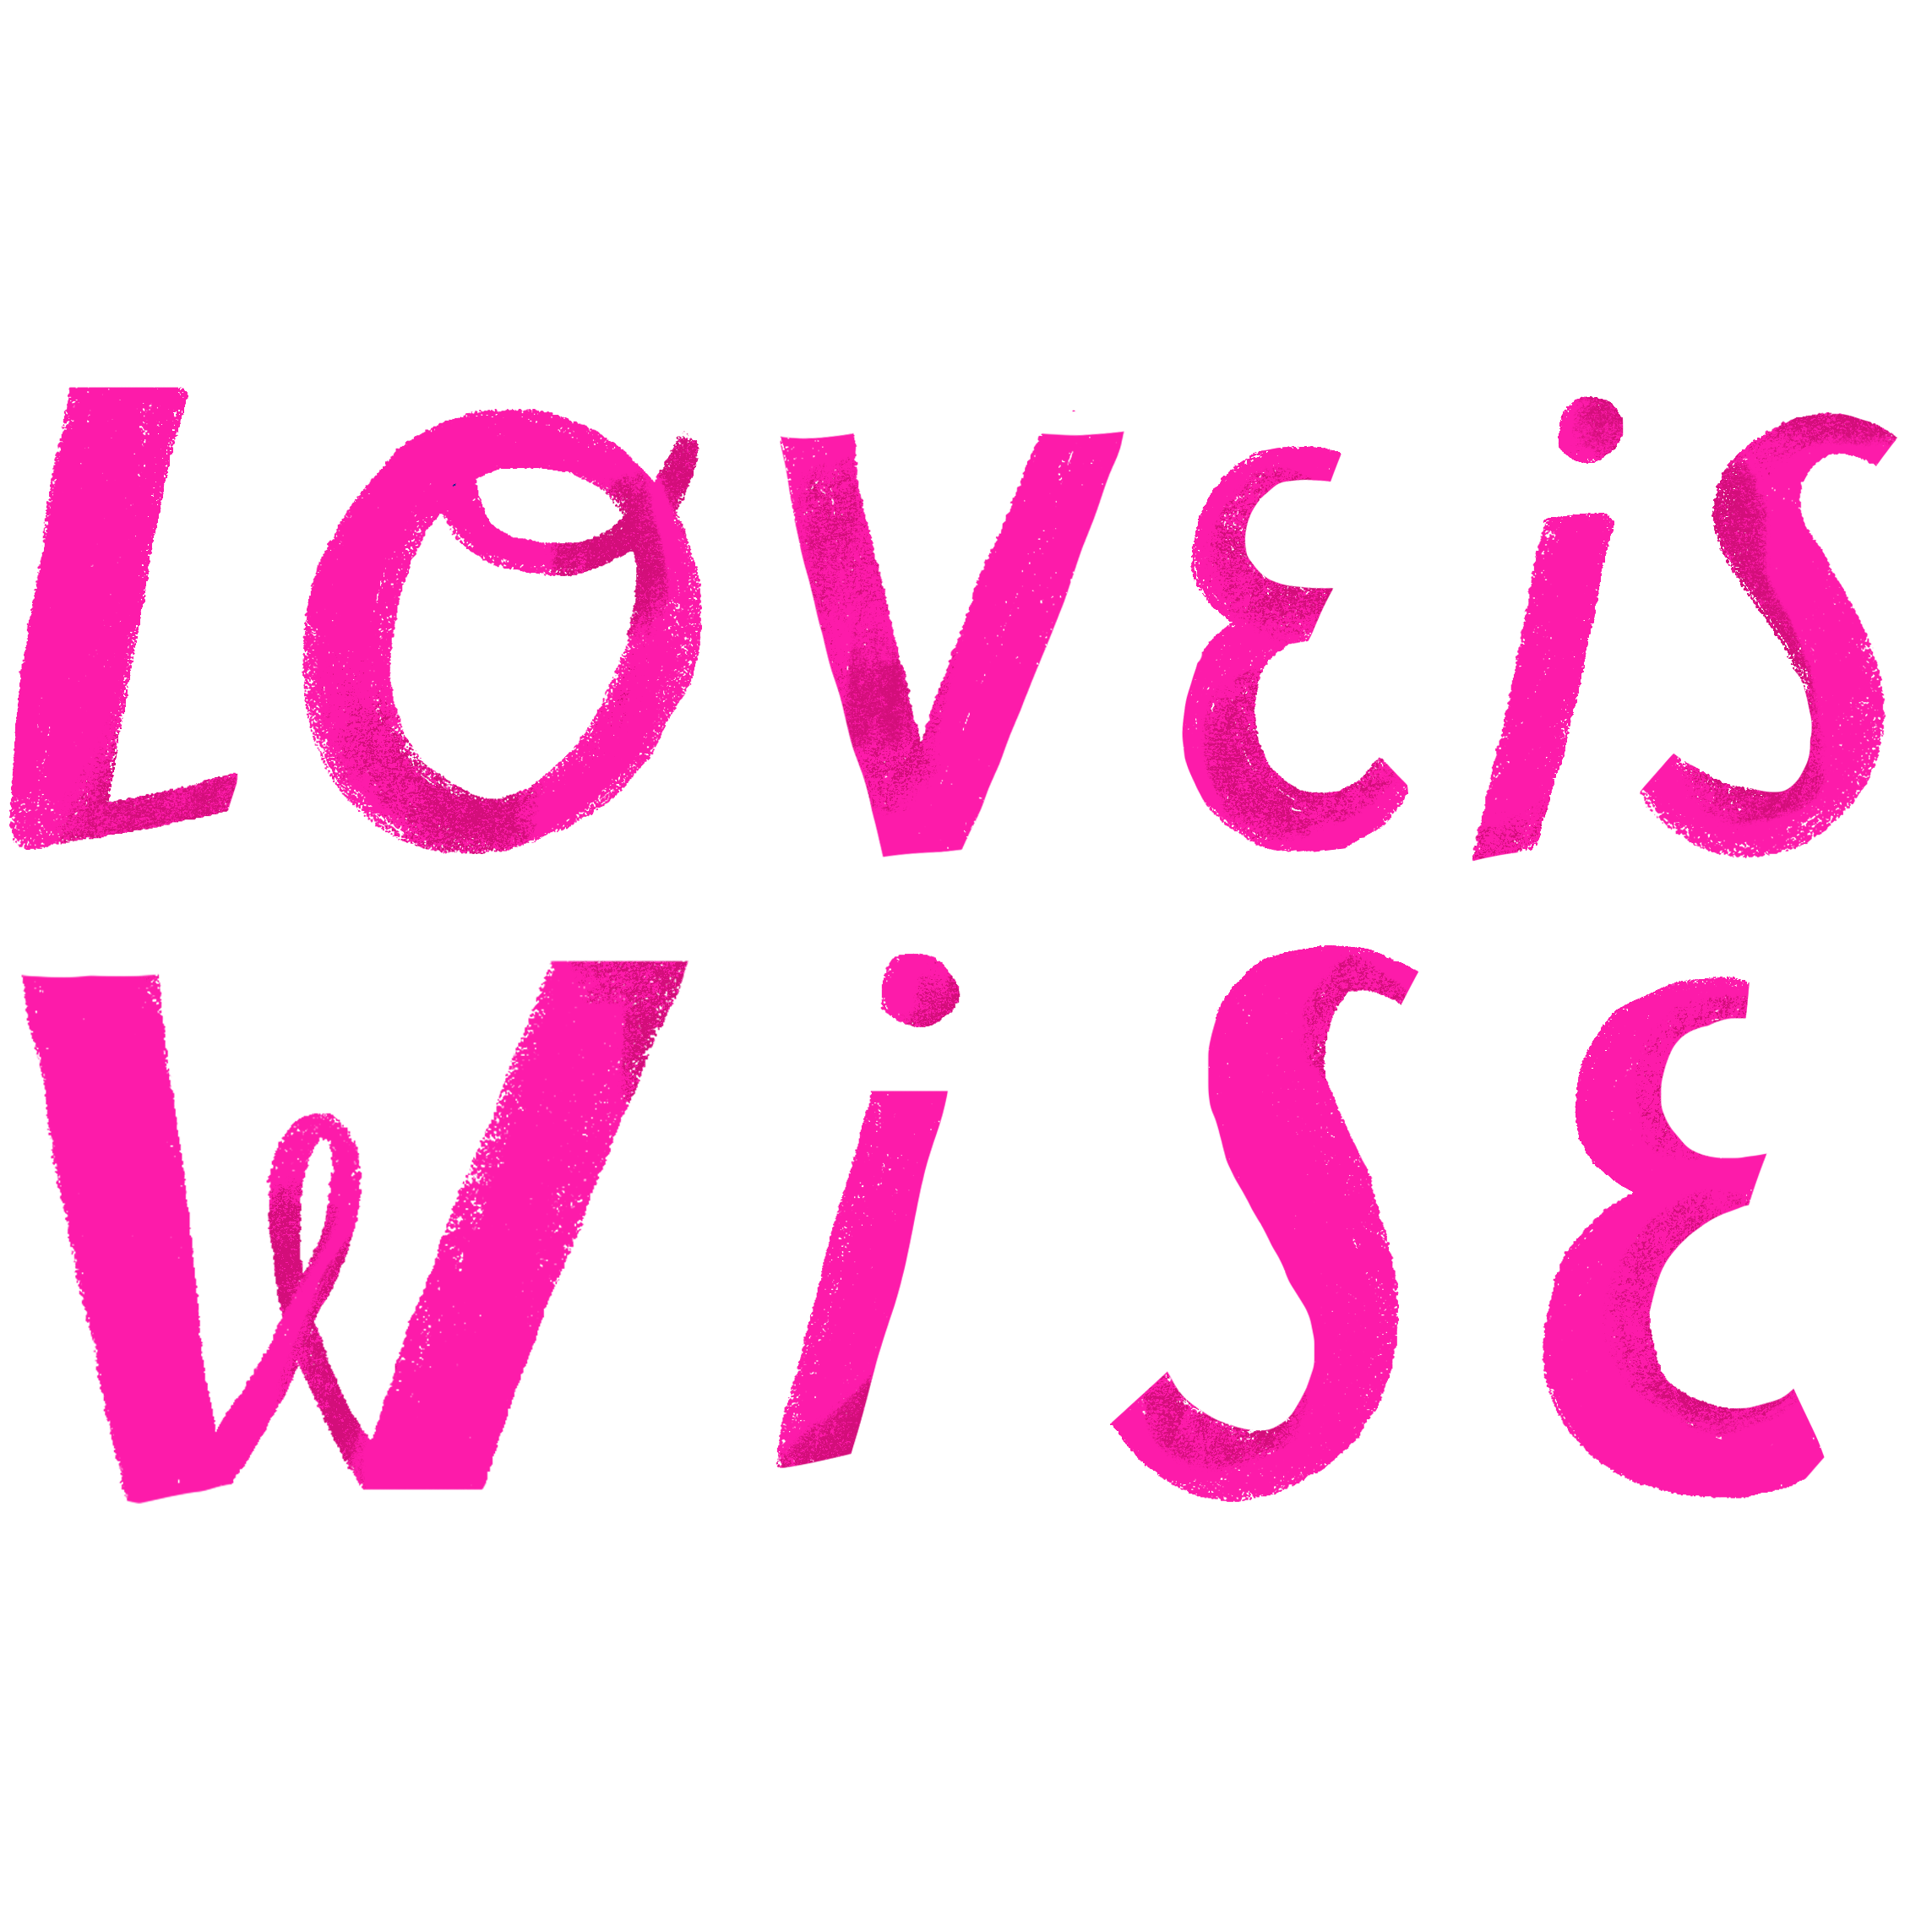 Loveis Wise